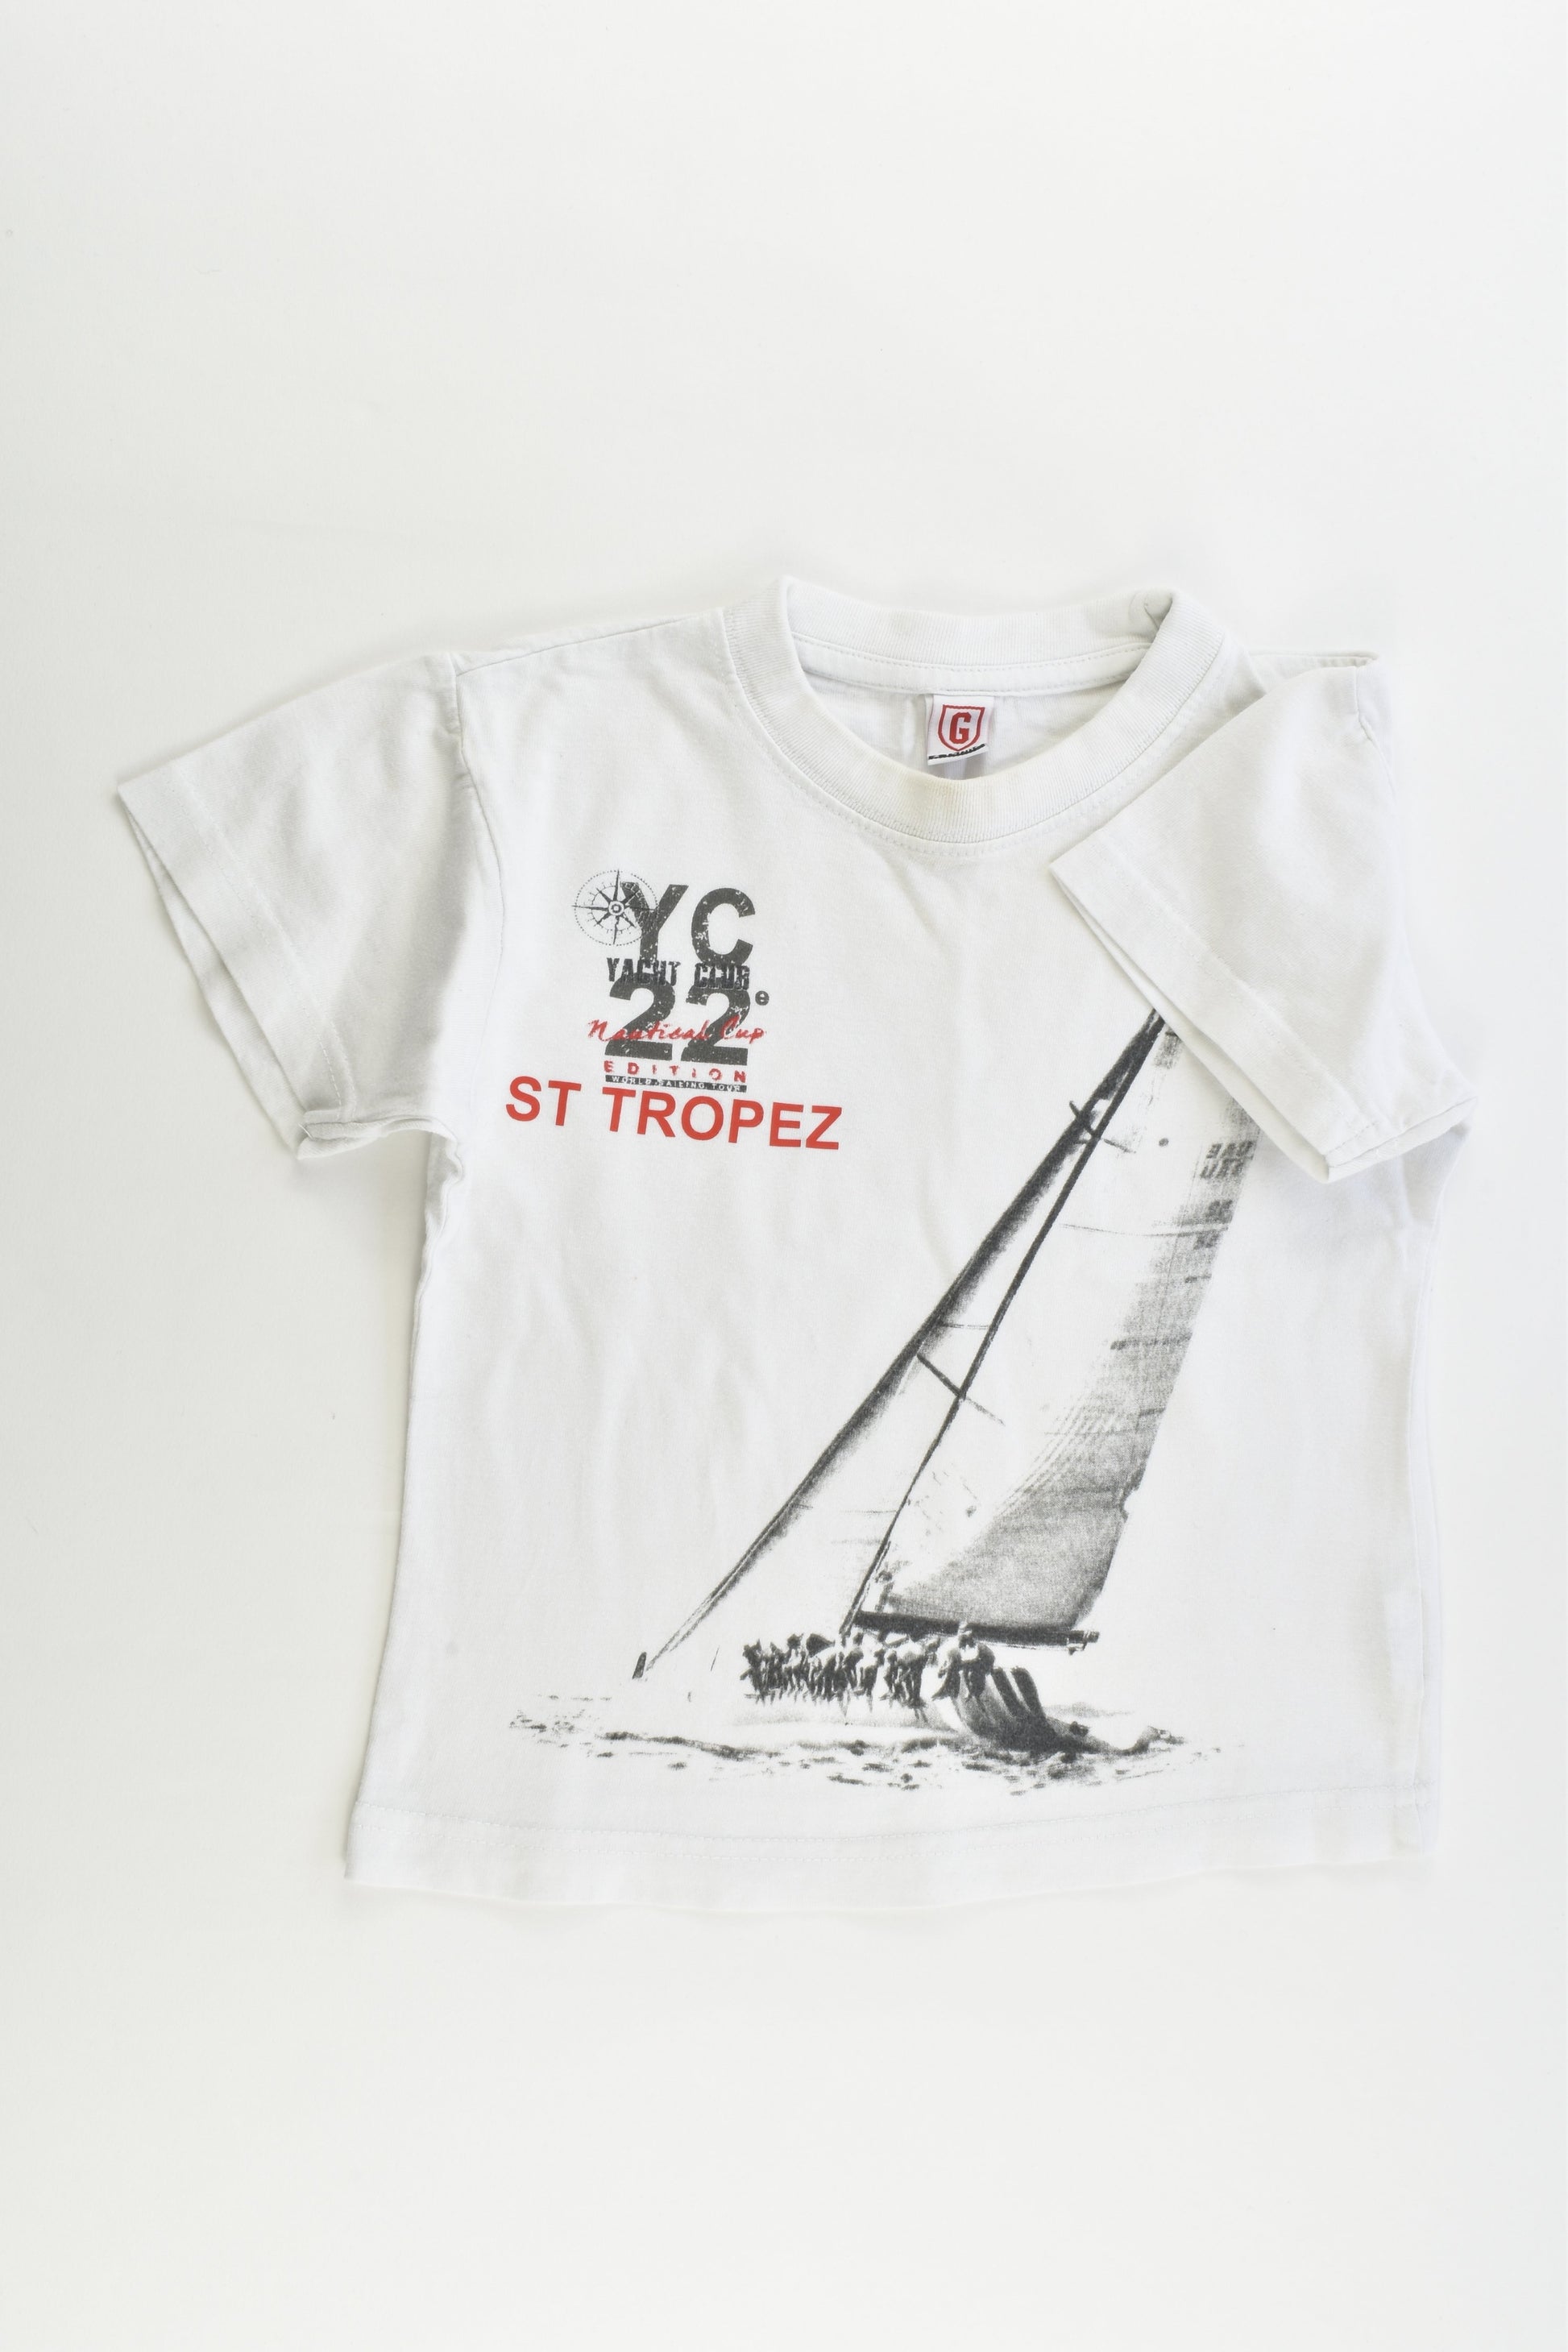 G Size 2 'St Tropez' Sailboat T-shirt